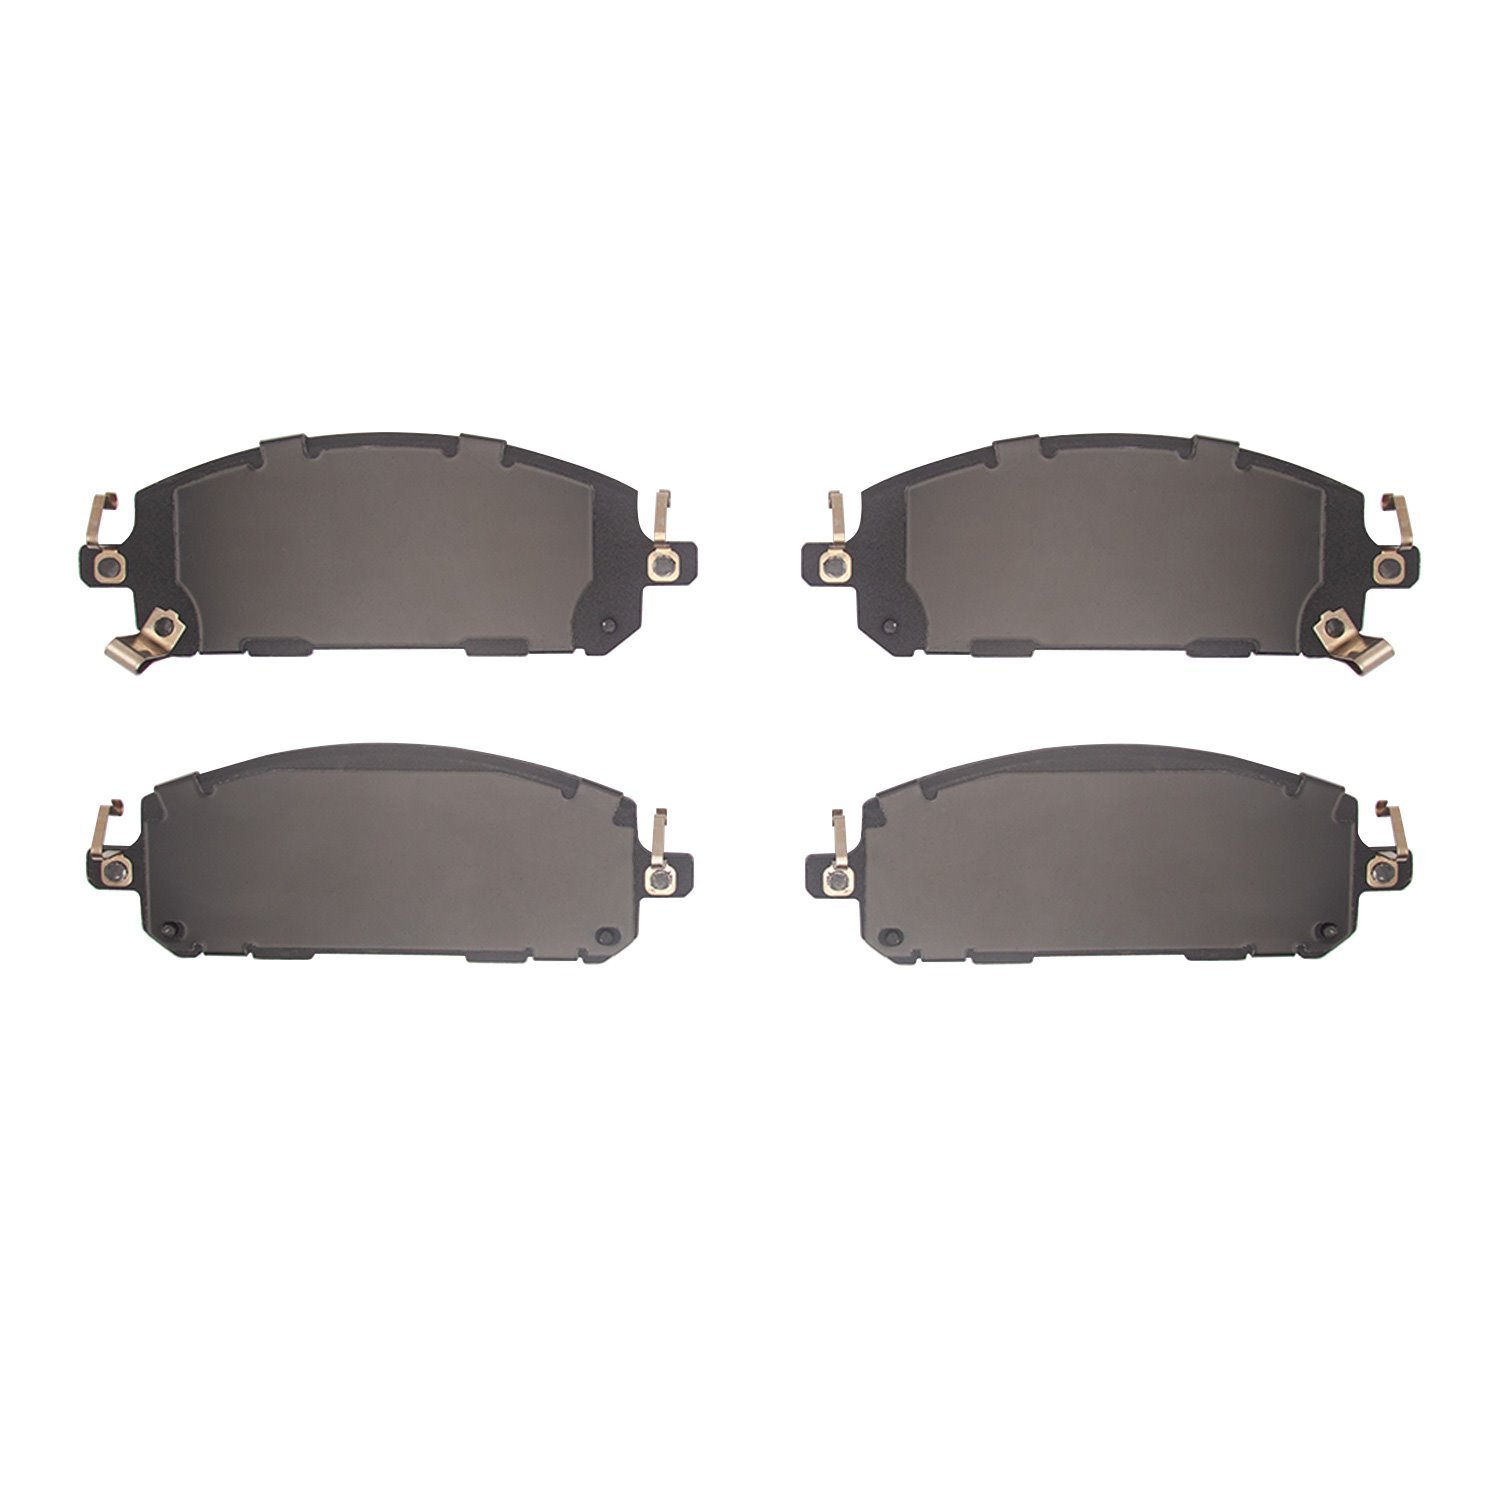 1551-2413-00 5000 Advanced Ceramic Brake Pads, Fits Select Multiple Makes/Models, Position: Front